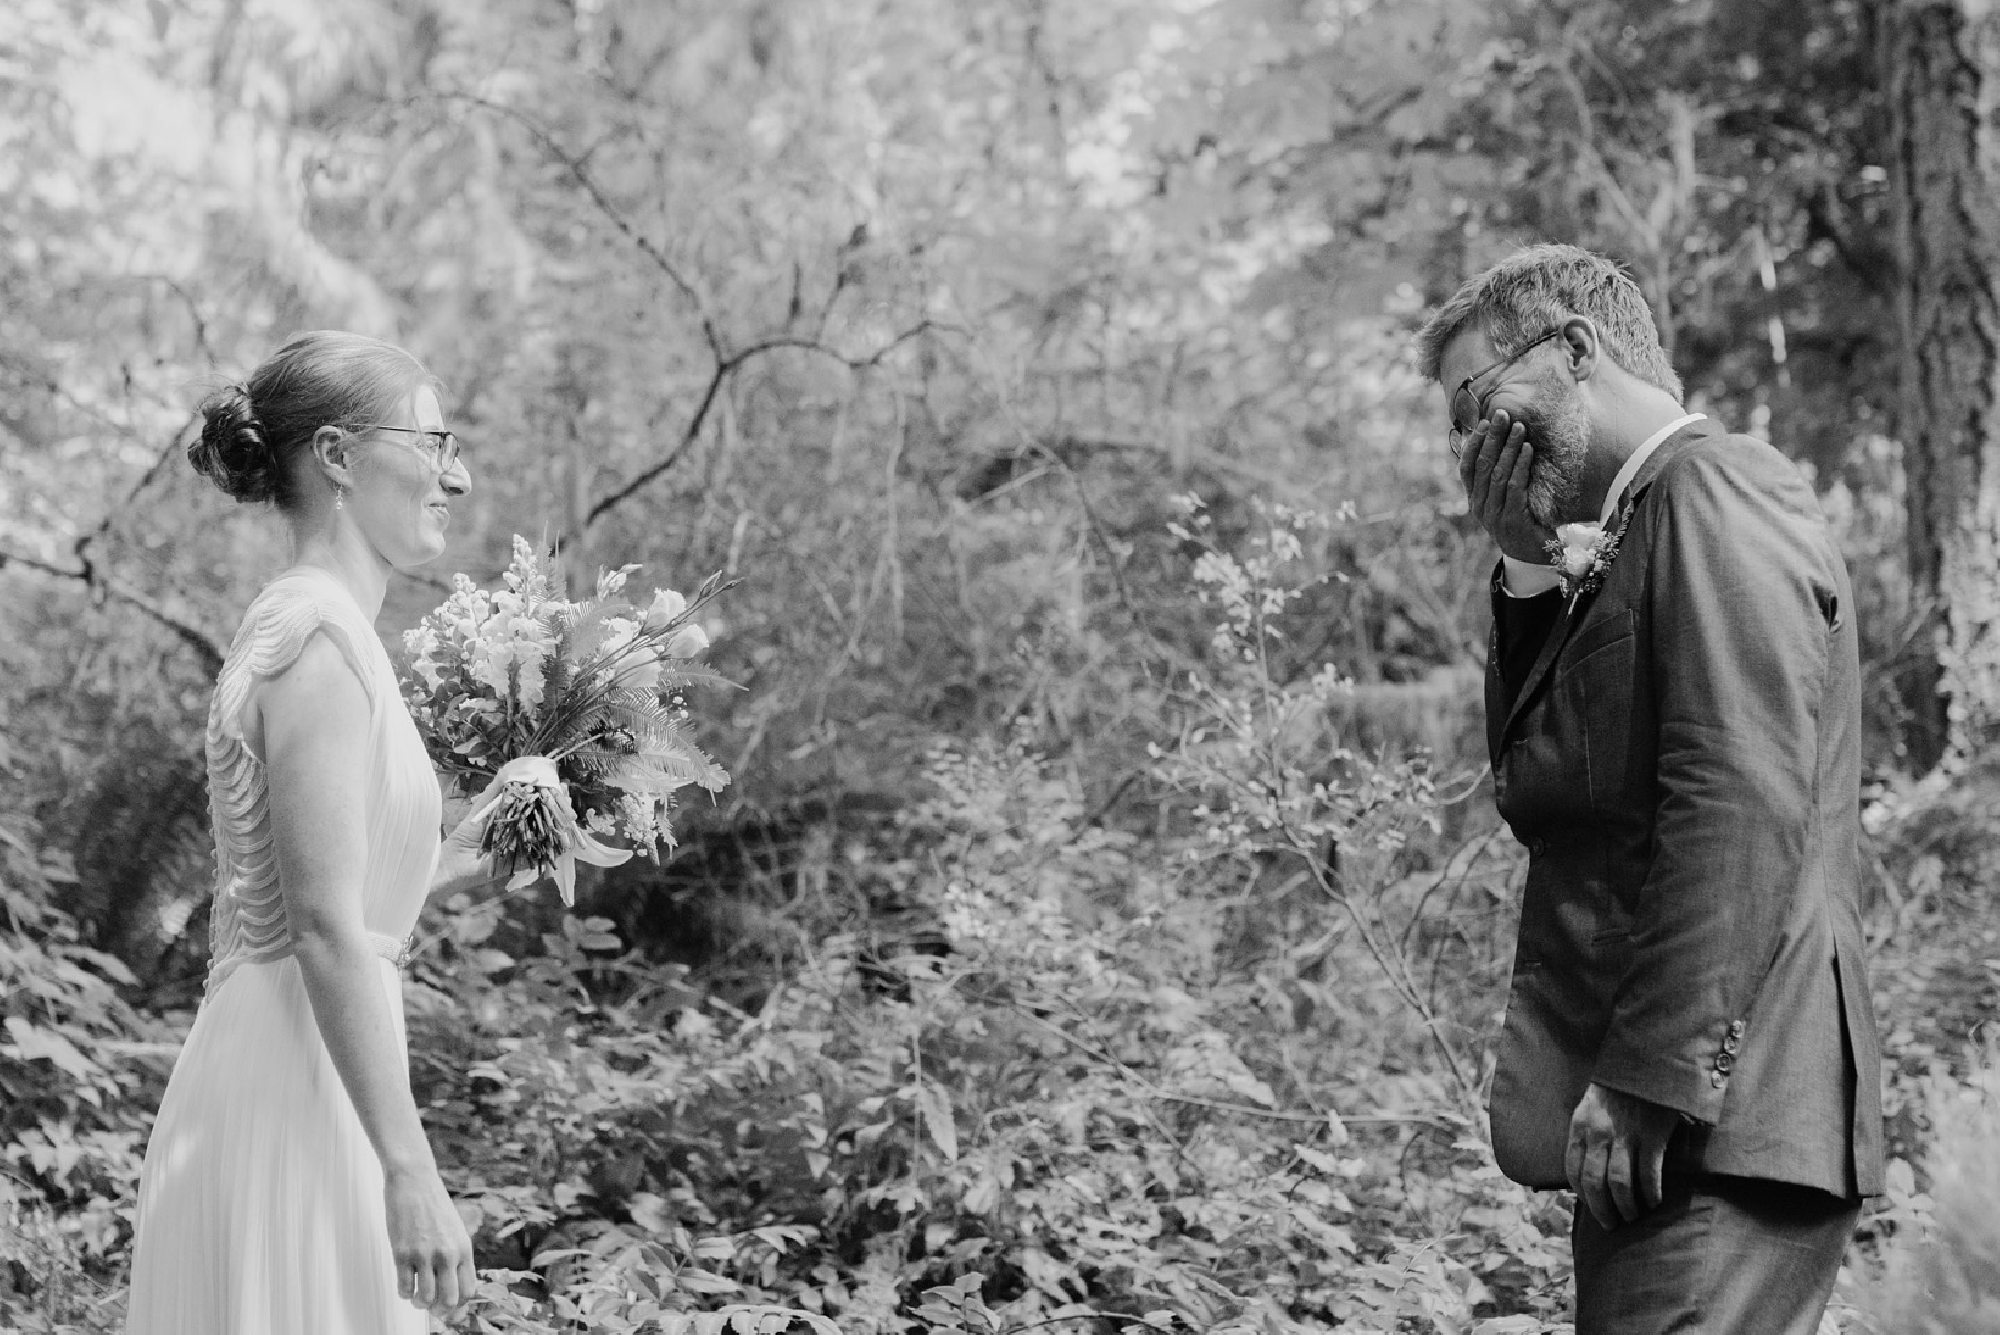 Emotional First Look between Bride and Groom | Portland Wedding Photographer